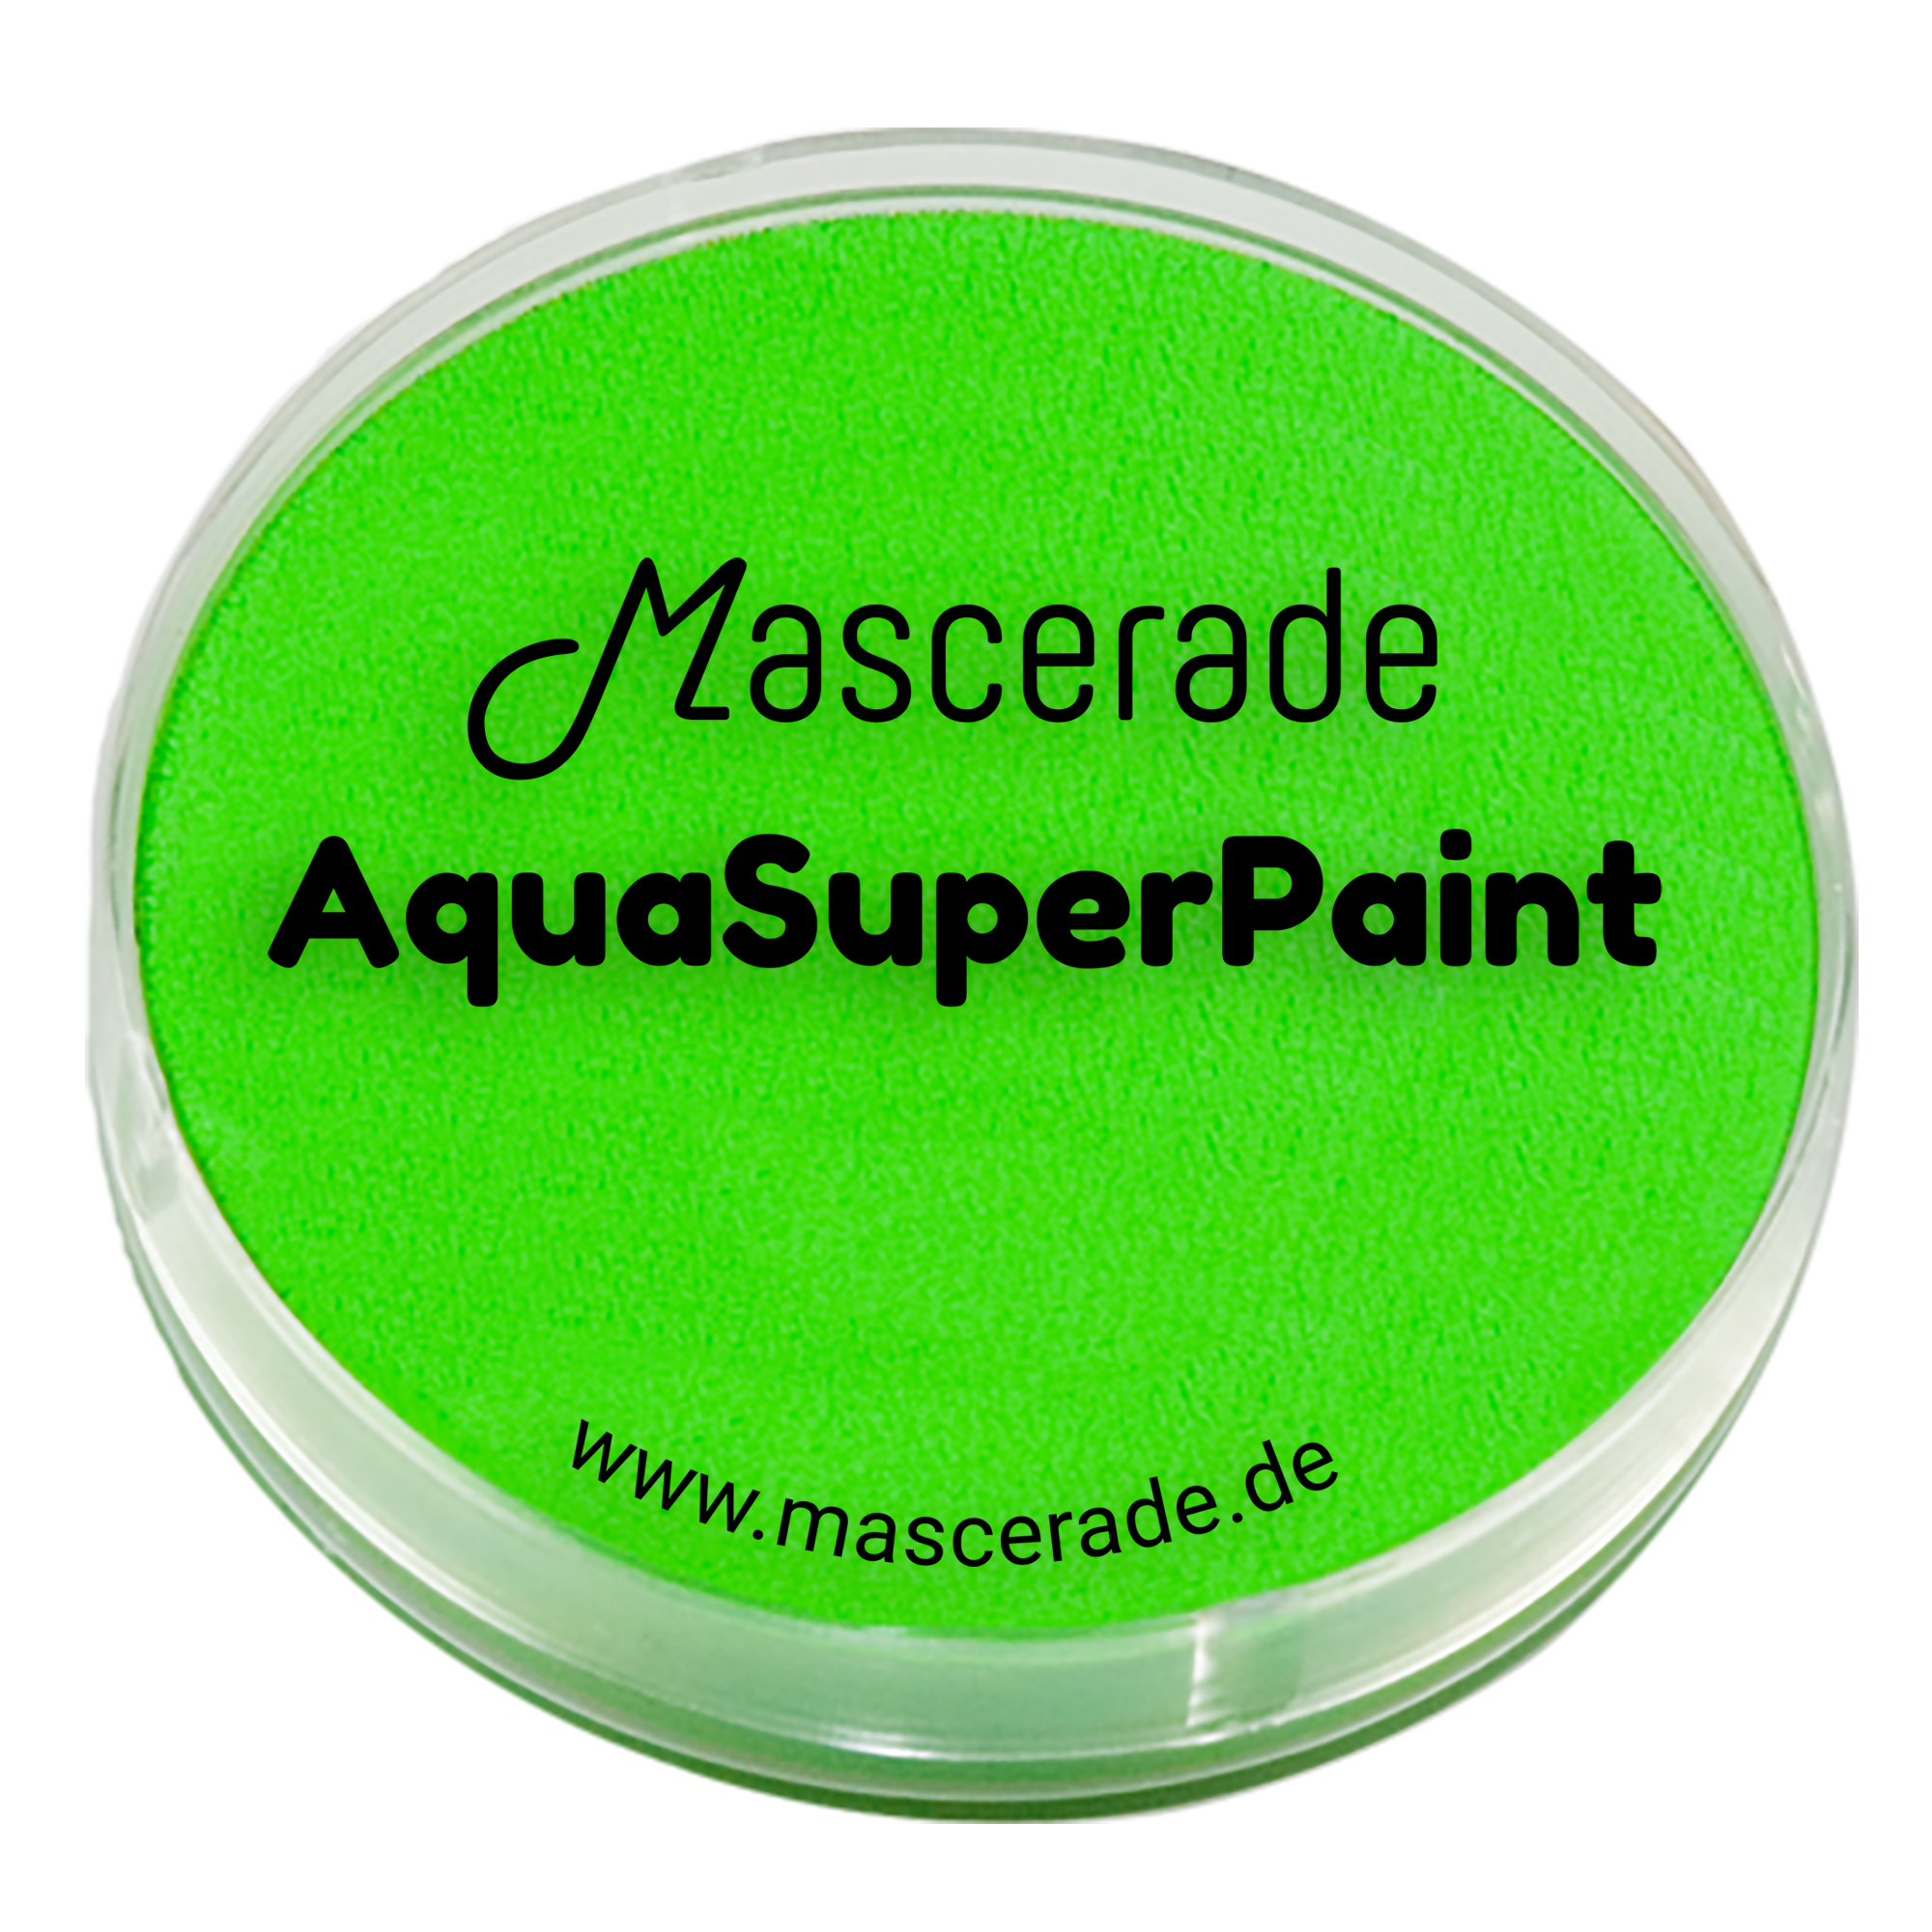 Mascerade AquaSuperPaint 30 ml Dose, Giftgruen_poison-green